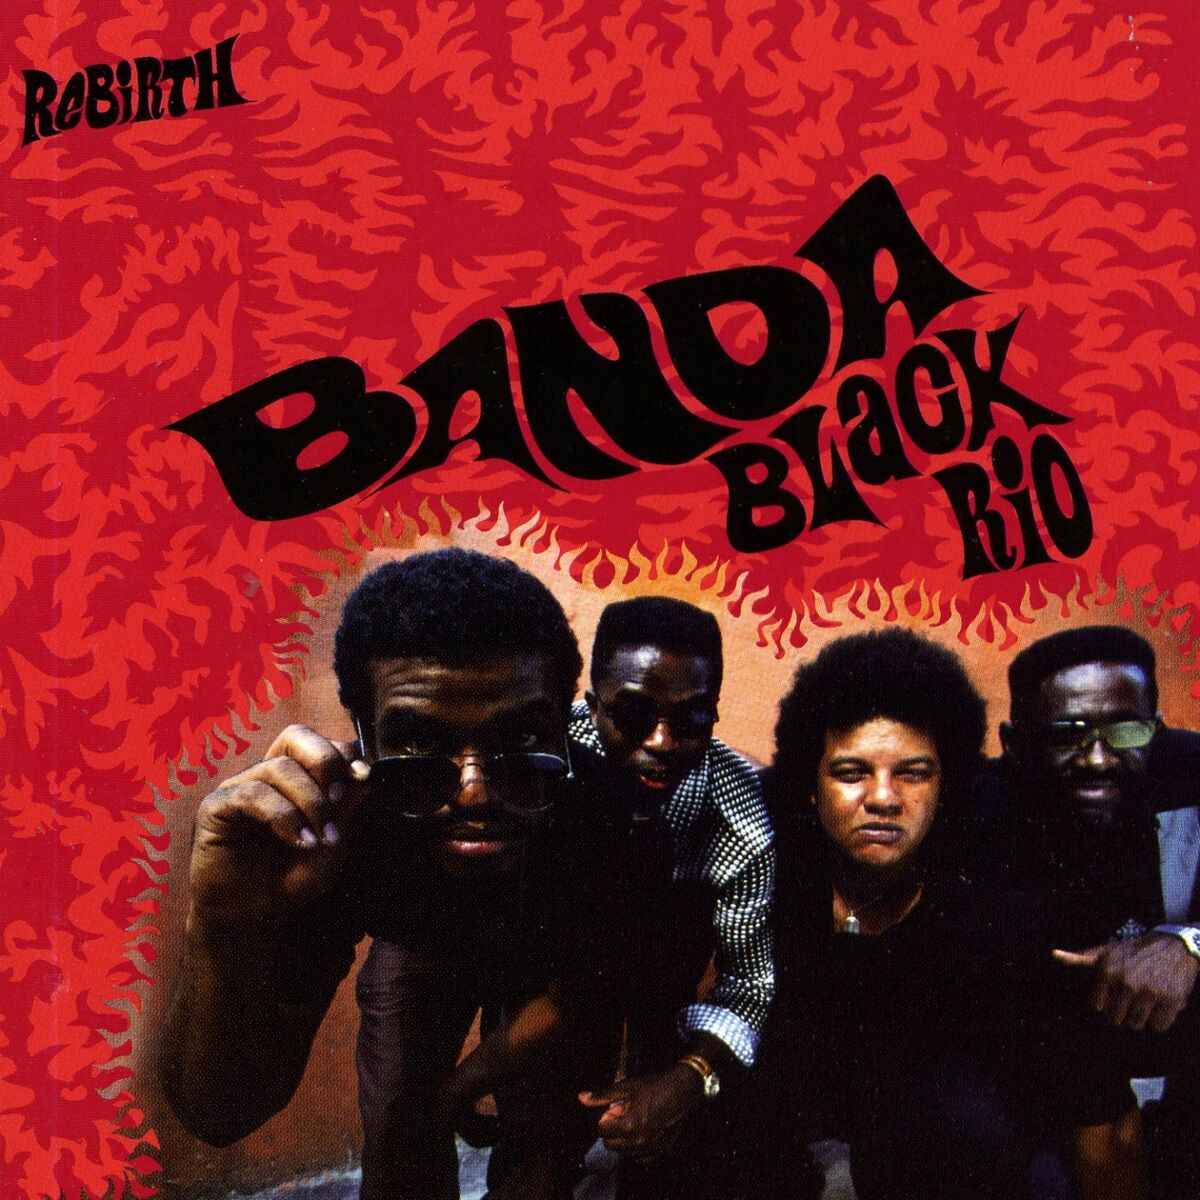 Banda Black Rio: albums, songs, playlists | Listen on Deezer